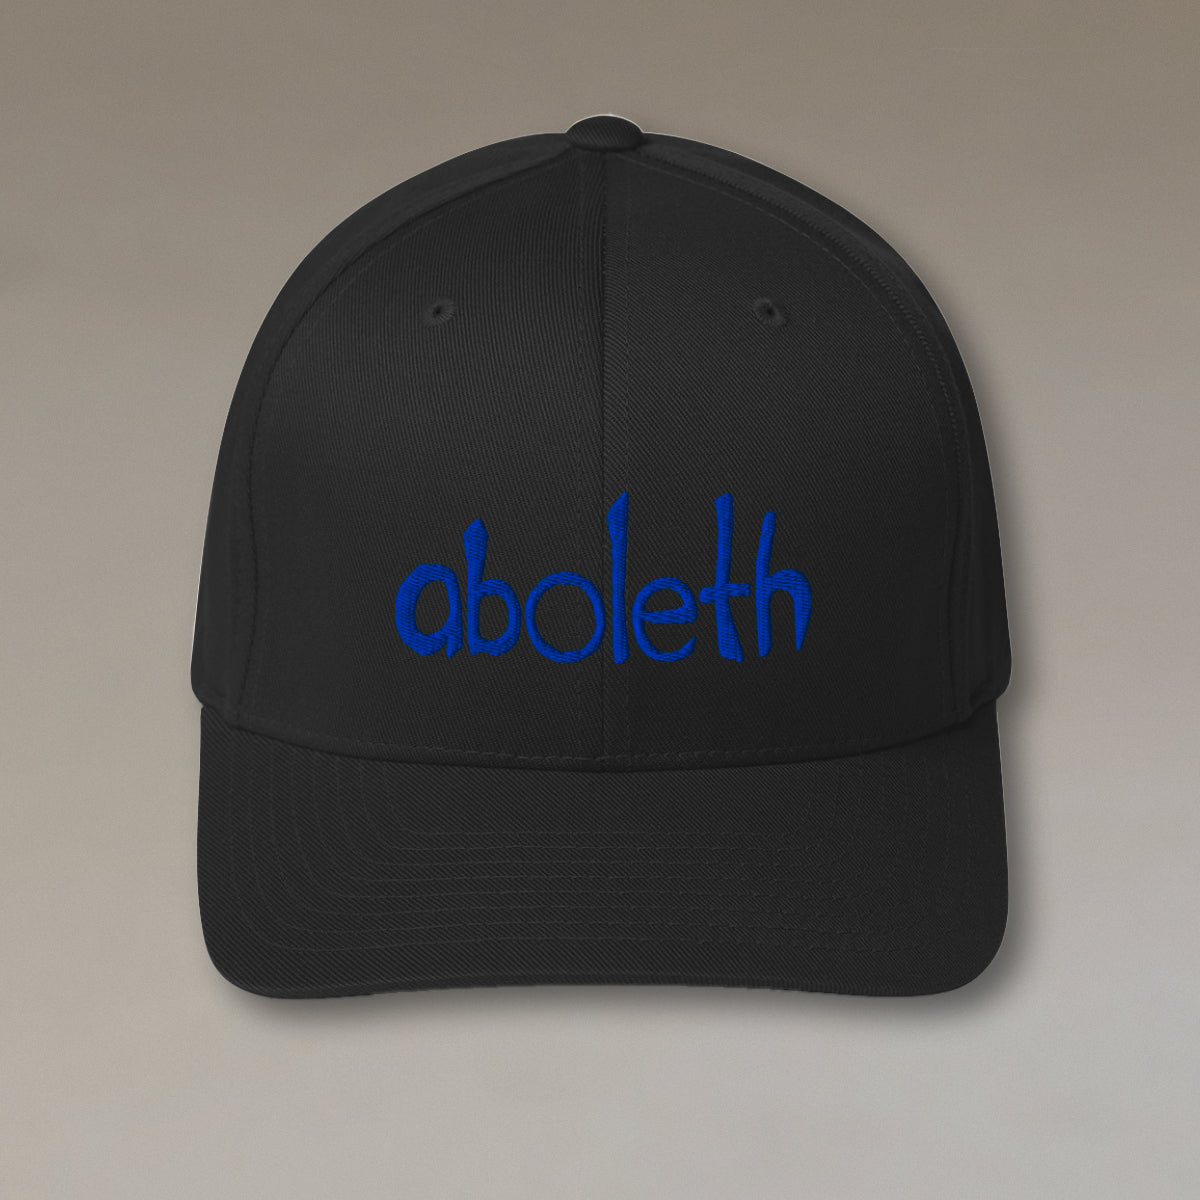 Aboleth - Hat